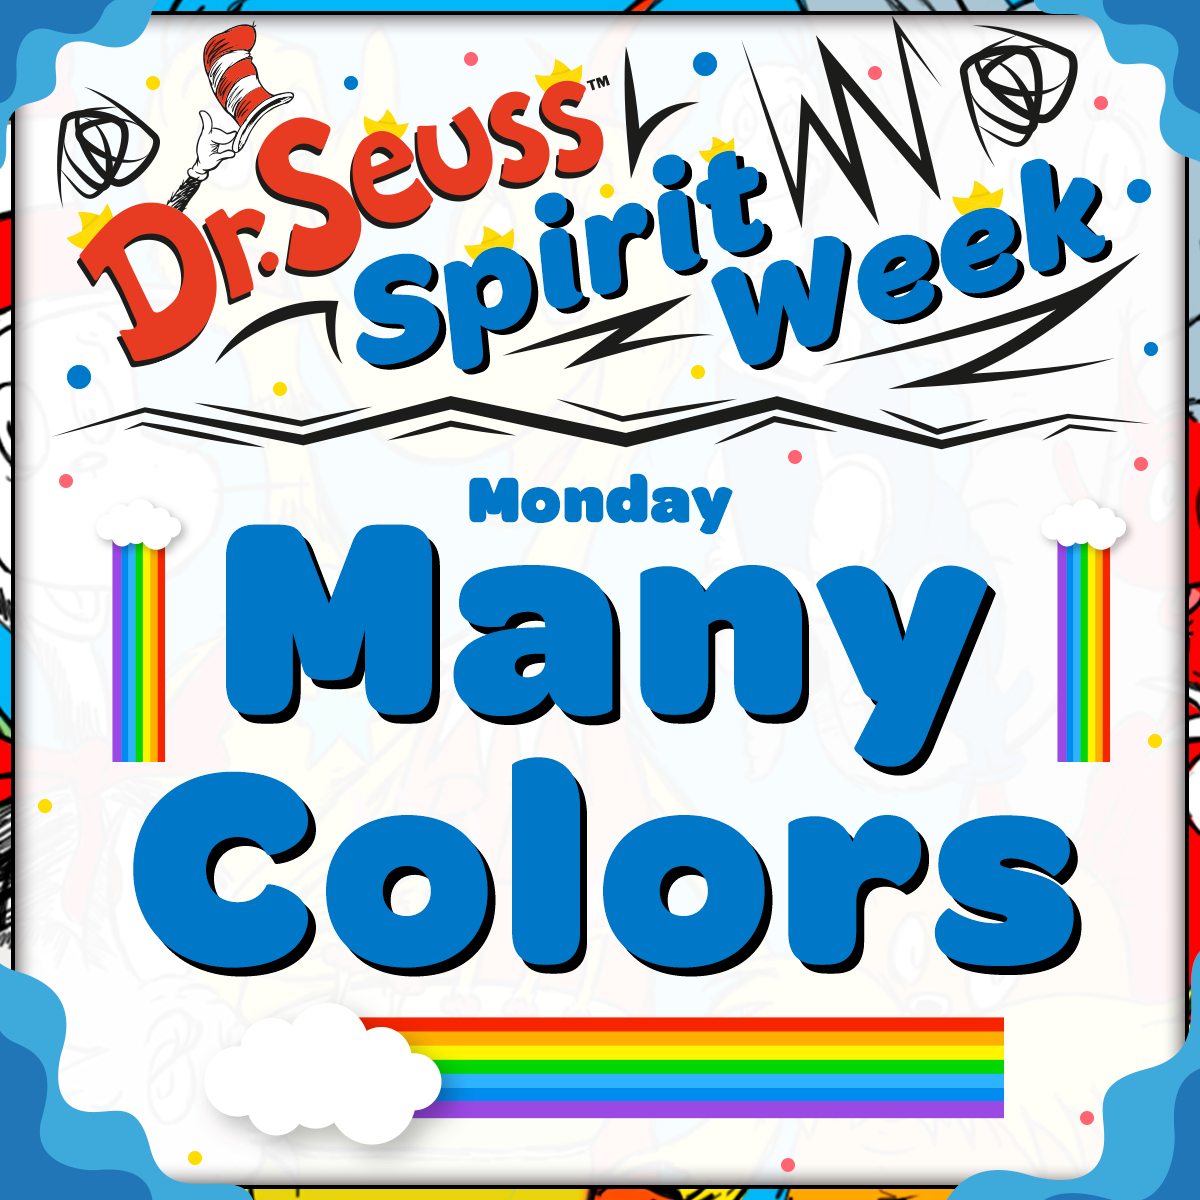 Dr. Seuss Spirit Week - Monday